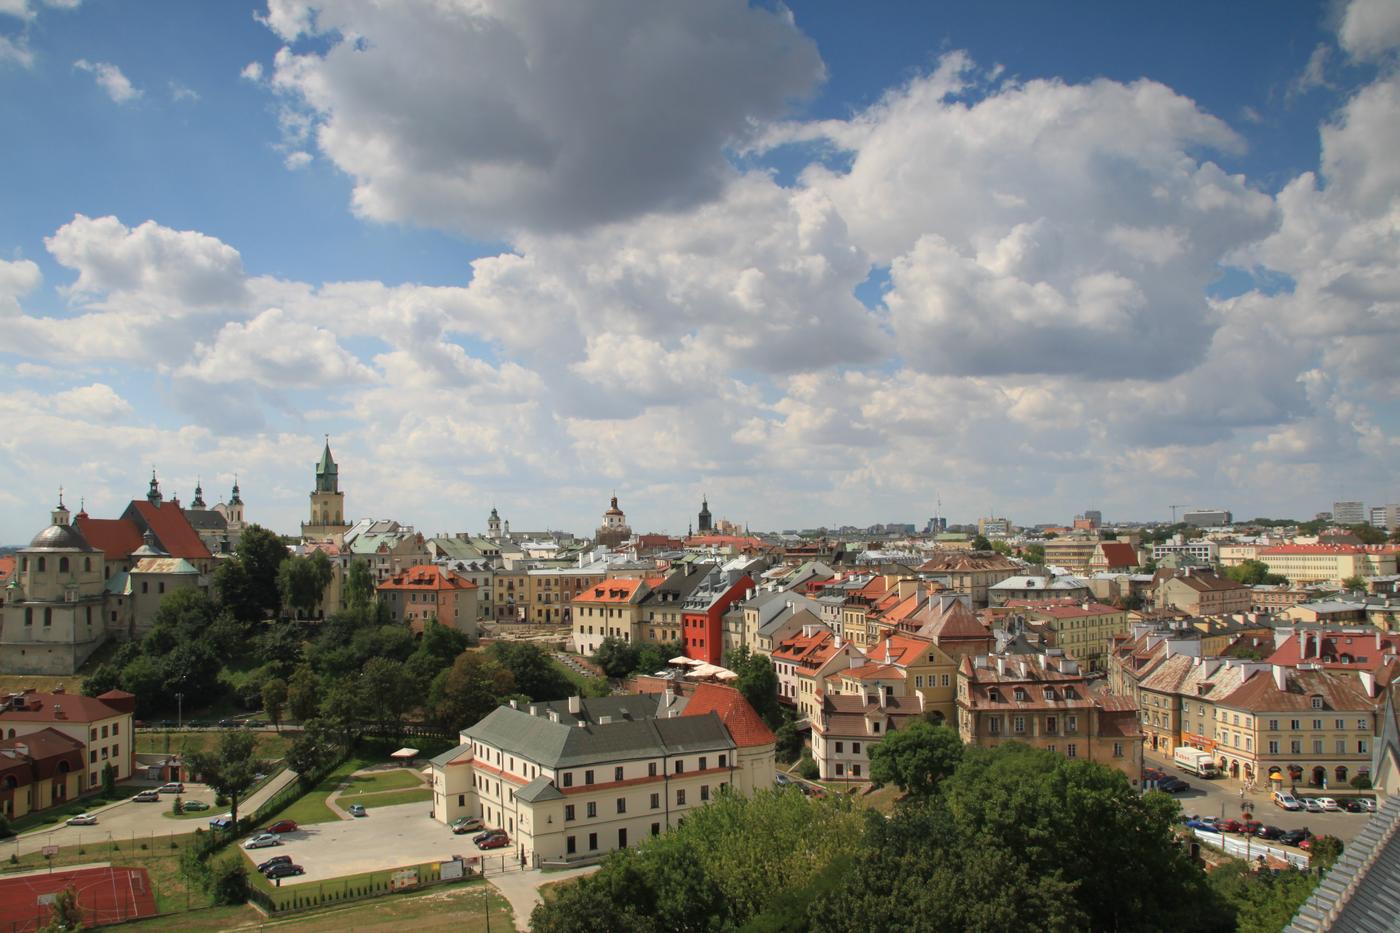 Lublin: A window into Poland's soul